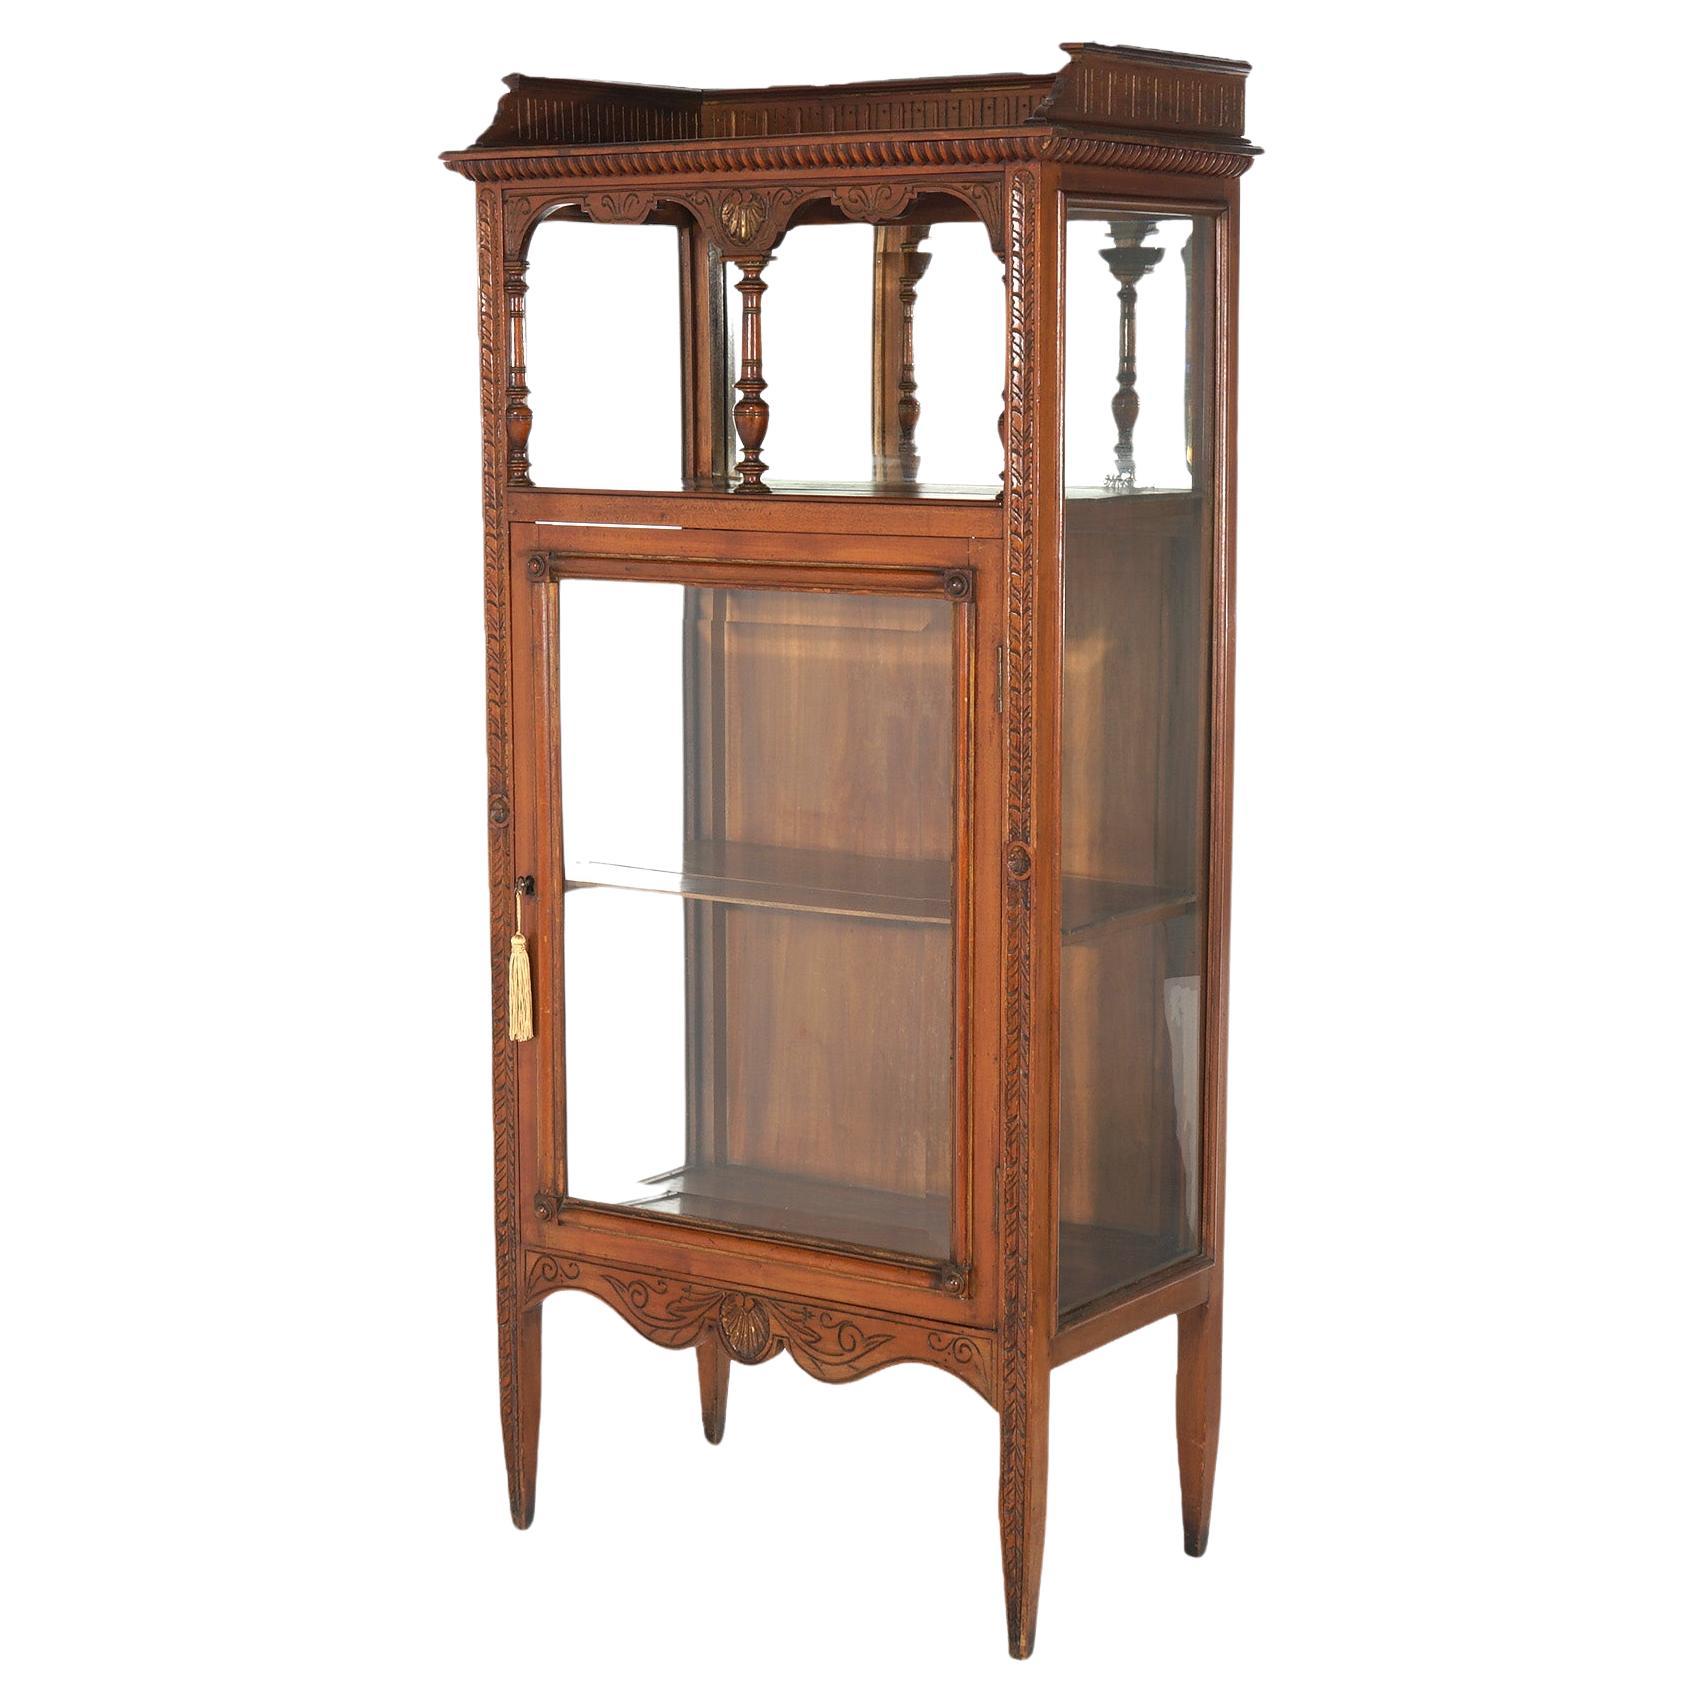 When were curio cabinets made?